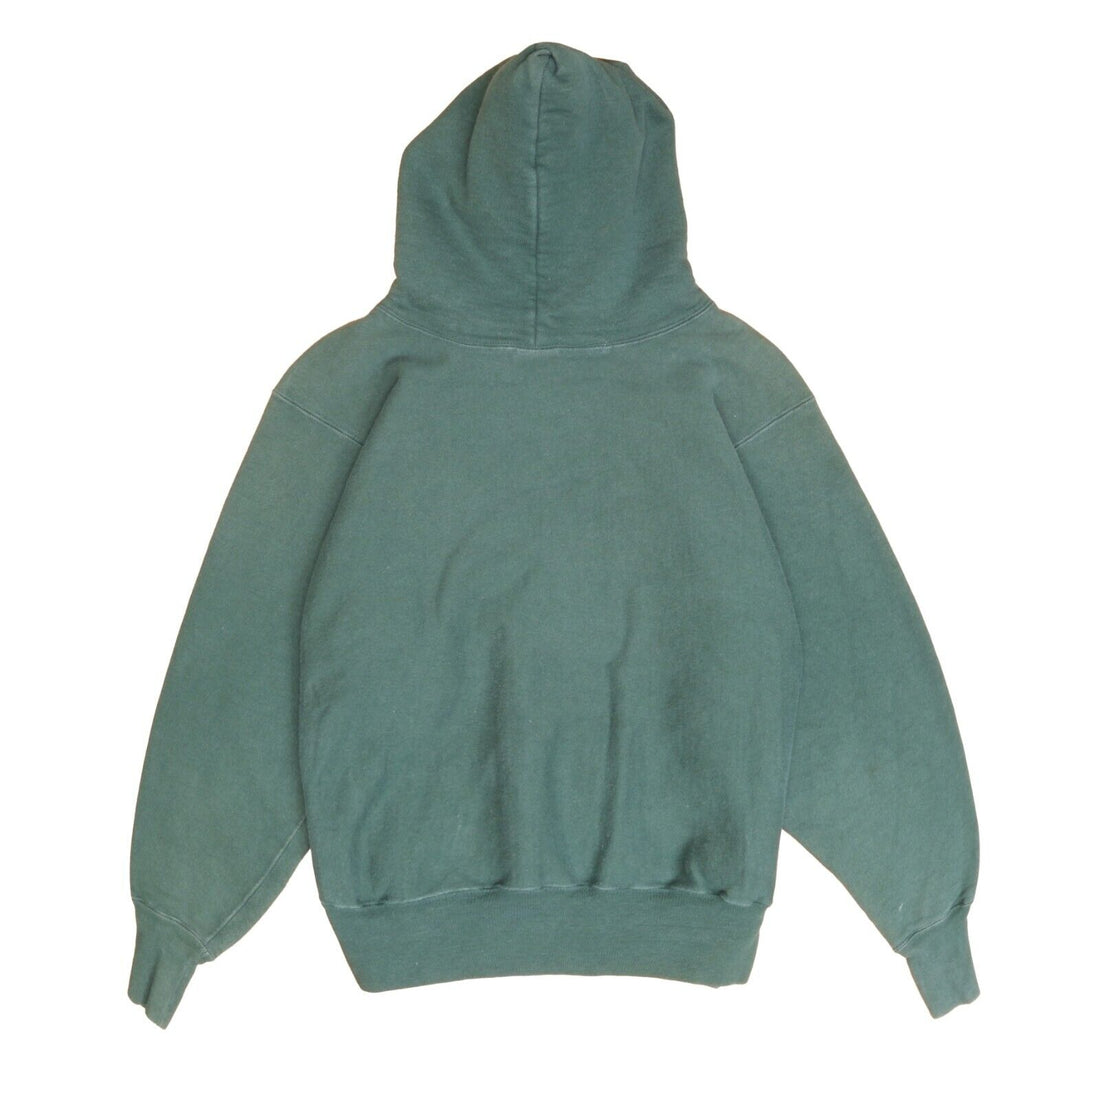 Vintage CW Post Champion Reverse Weave Sweatshirt Hoodie Size Medium Green 90s